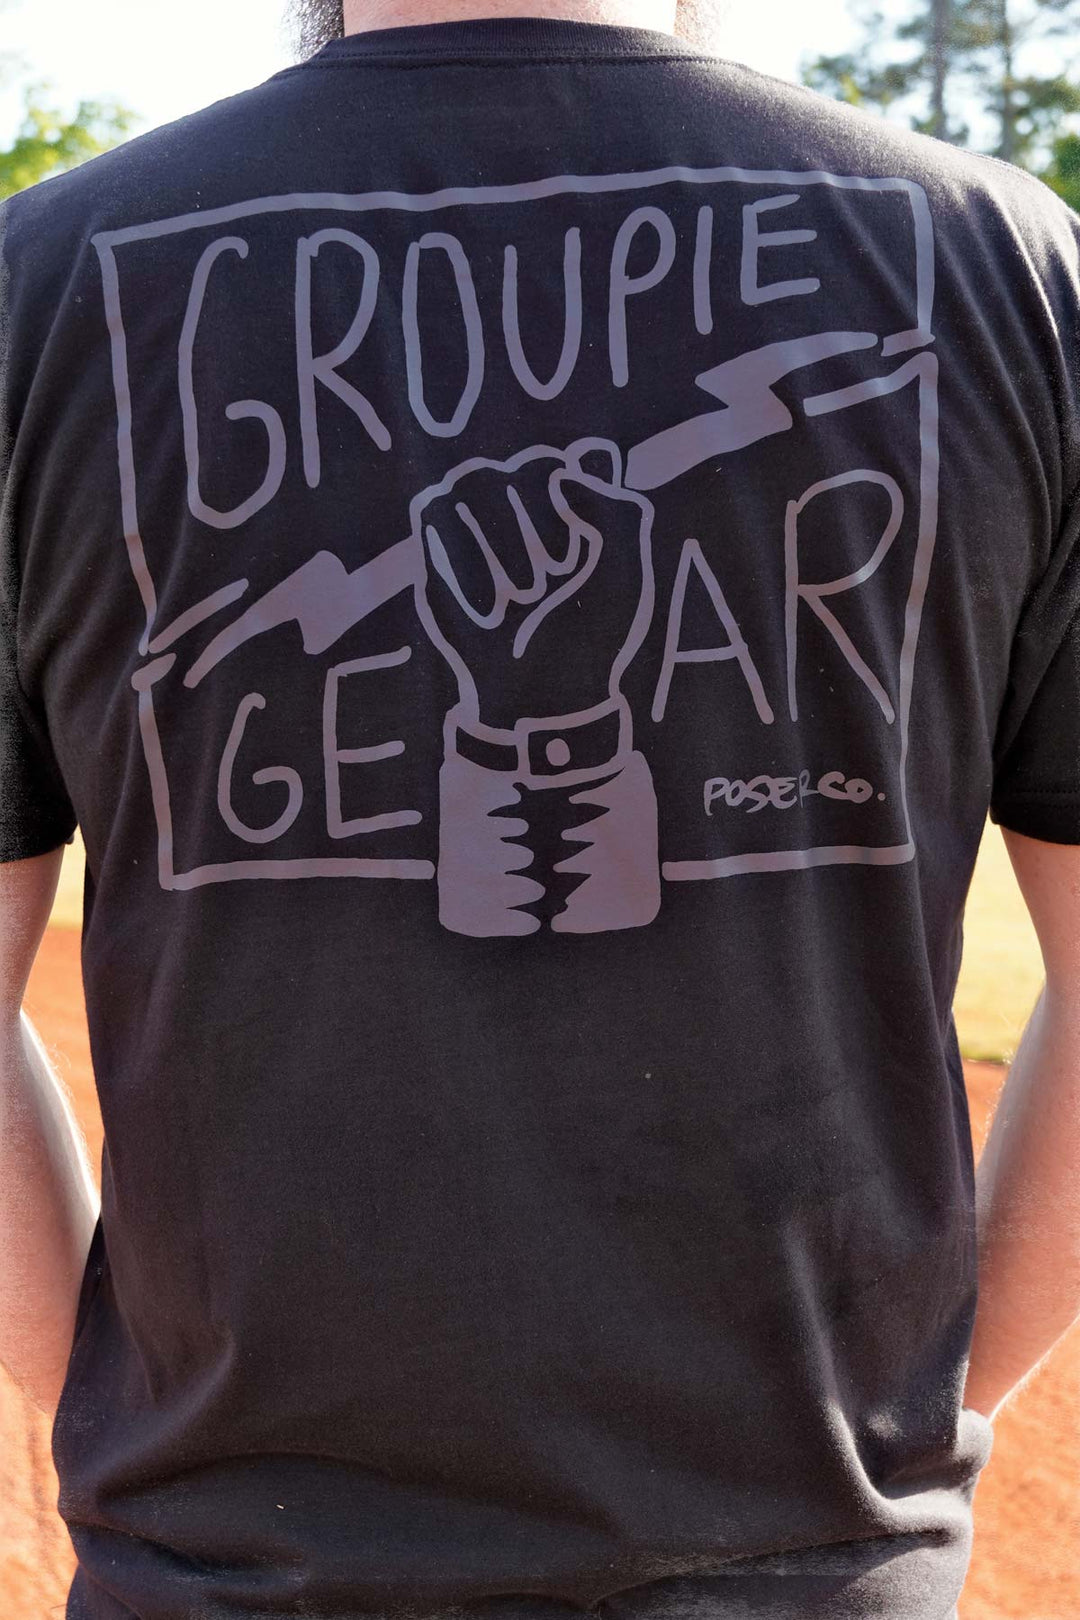 Groupie Gear TShirt